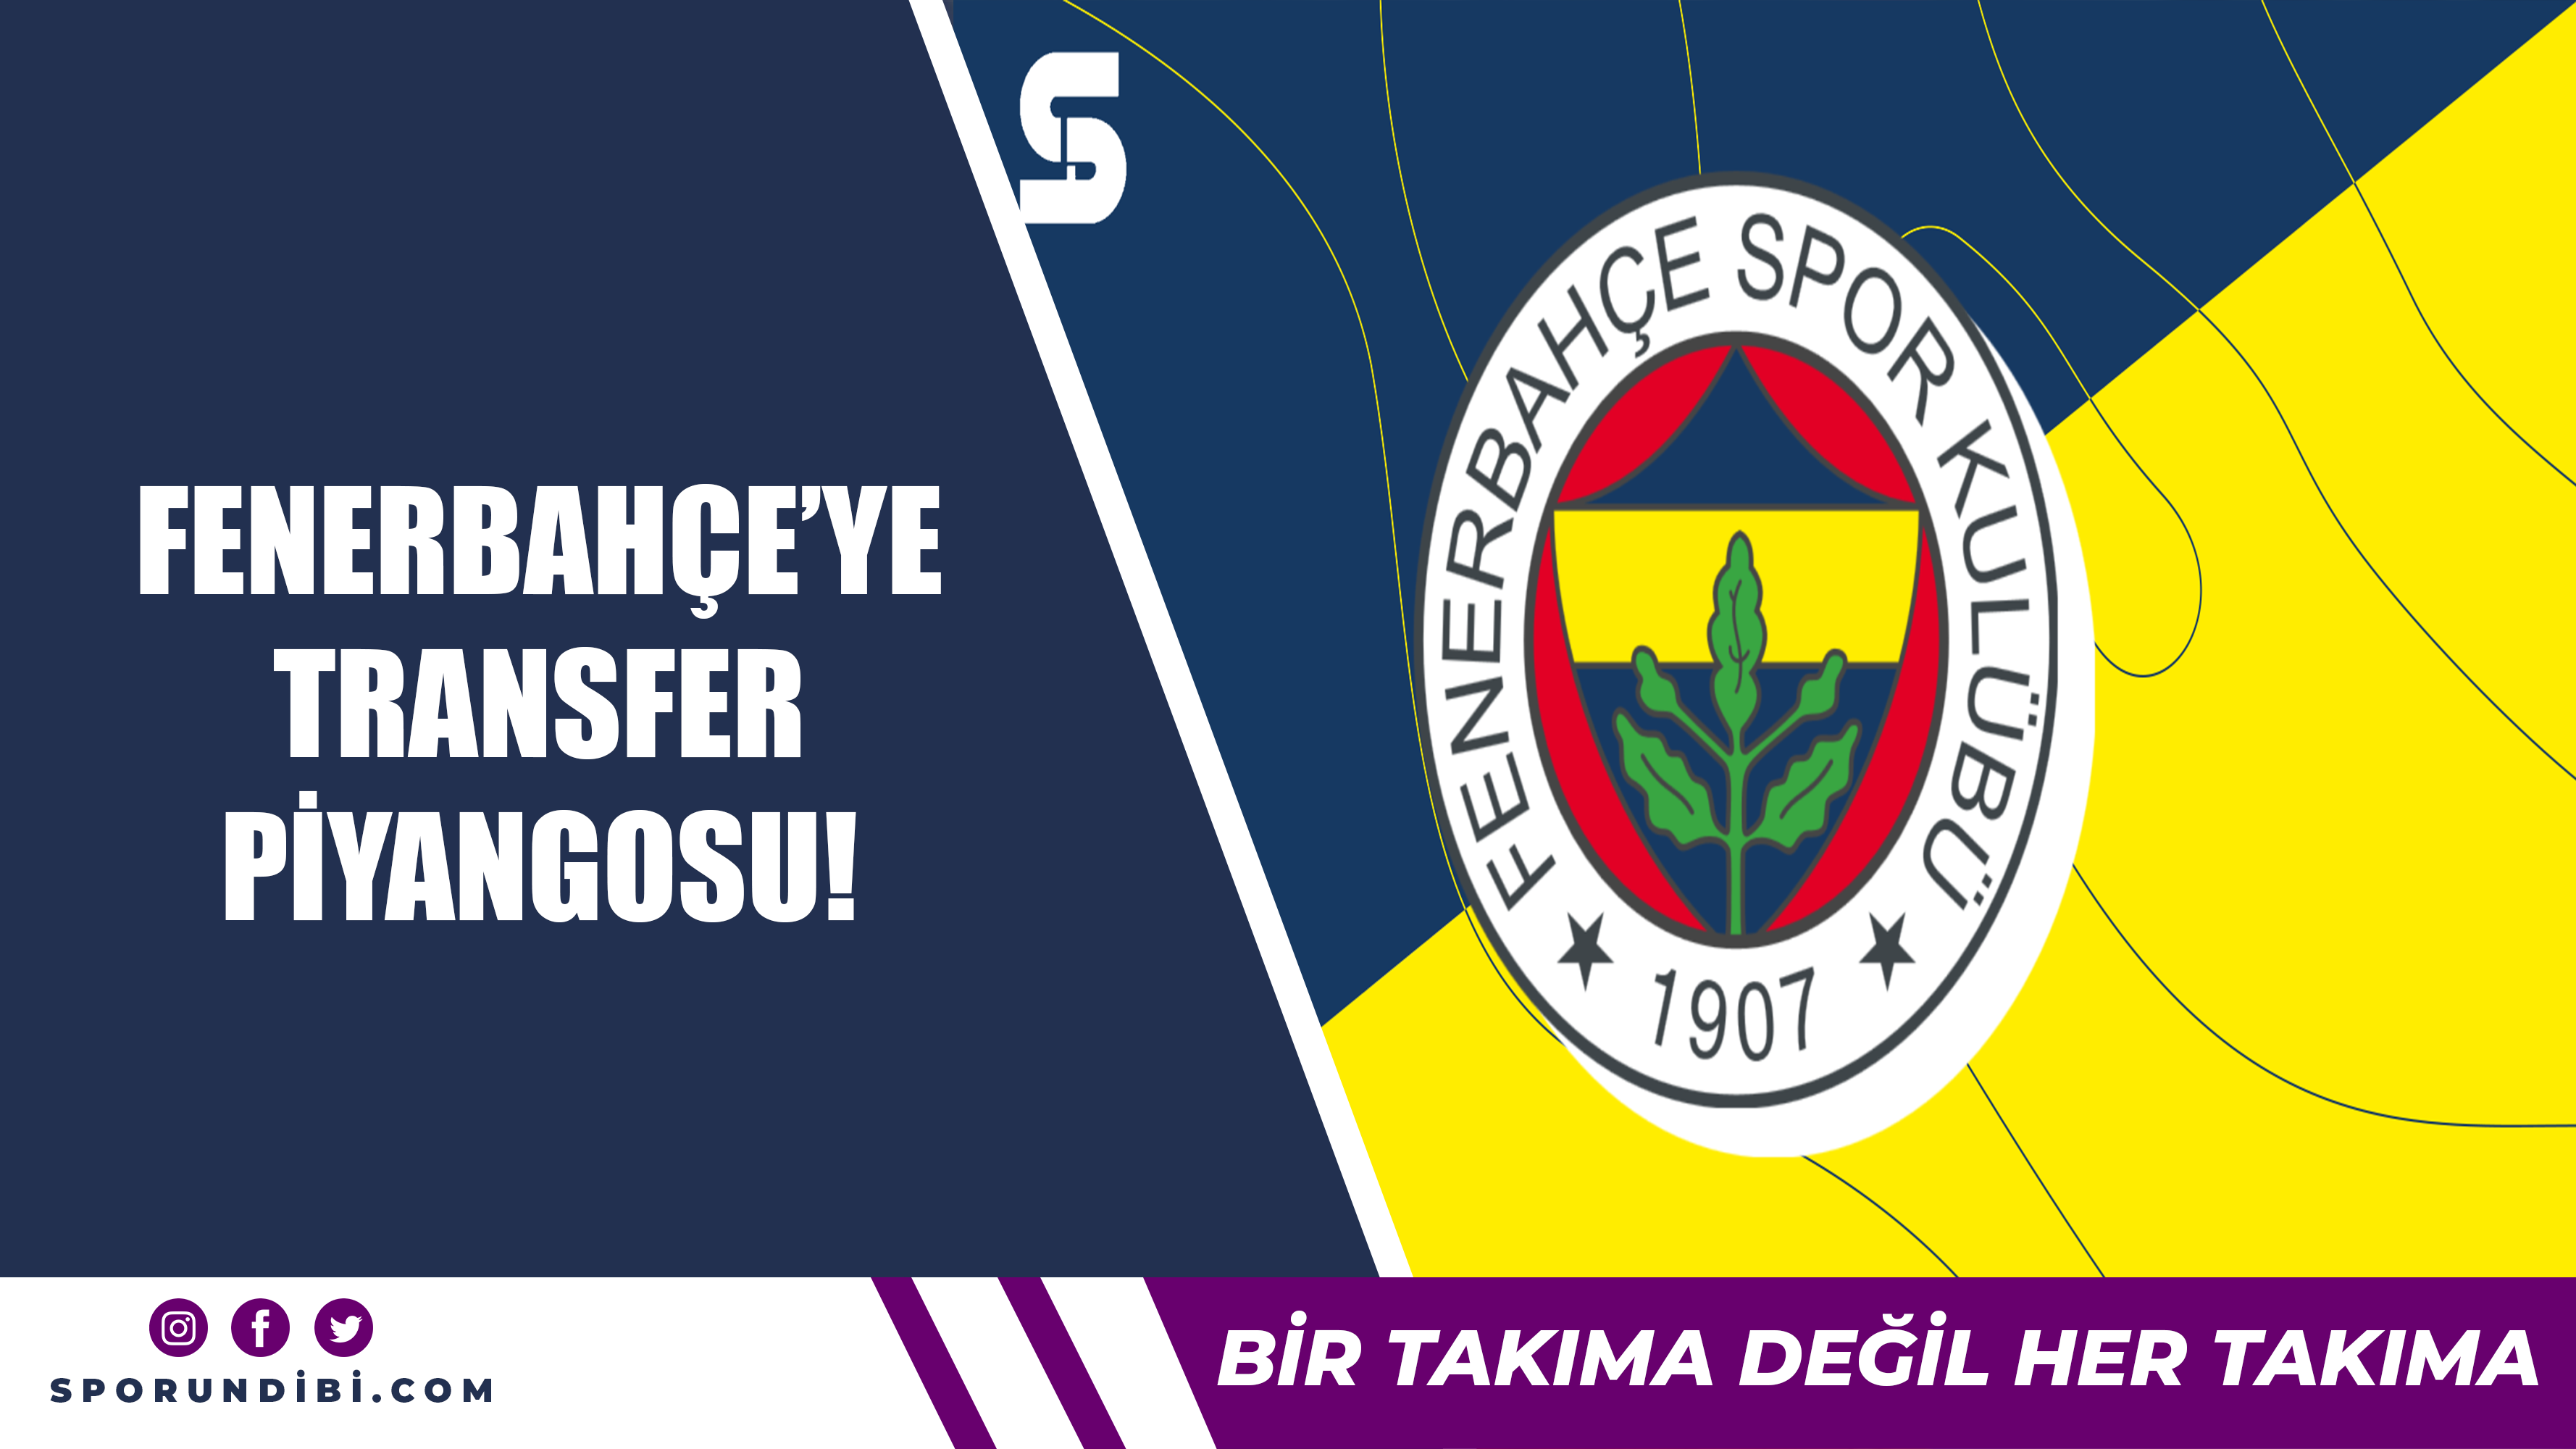 Fenerbahçe'ye transfer piyangosu!